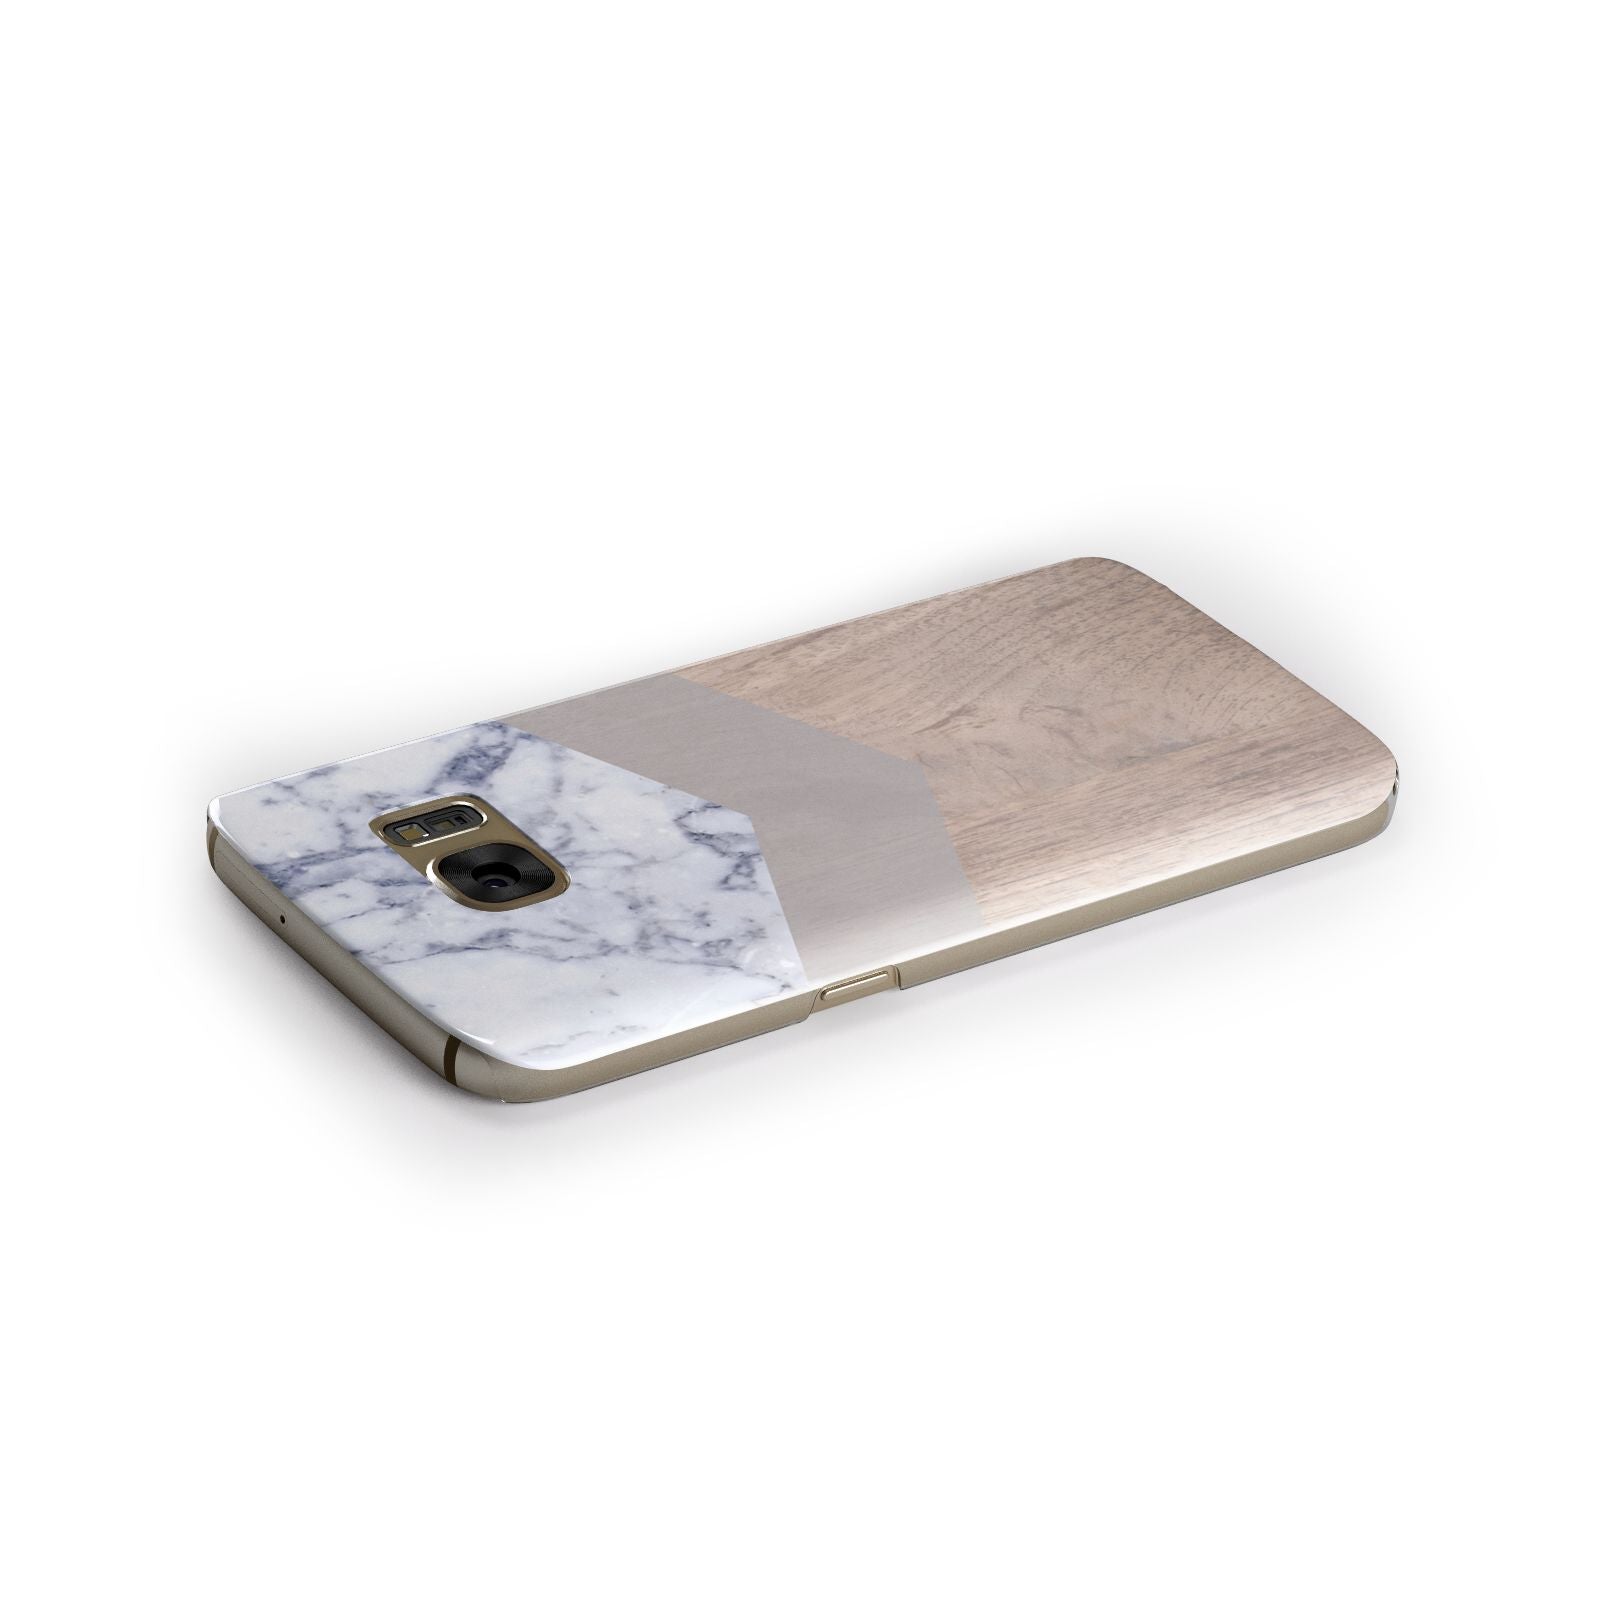 Marble Wood Geometric 4 Samsung Galaxy Case Side Close Up